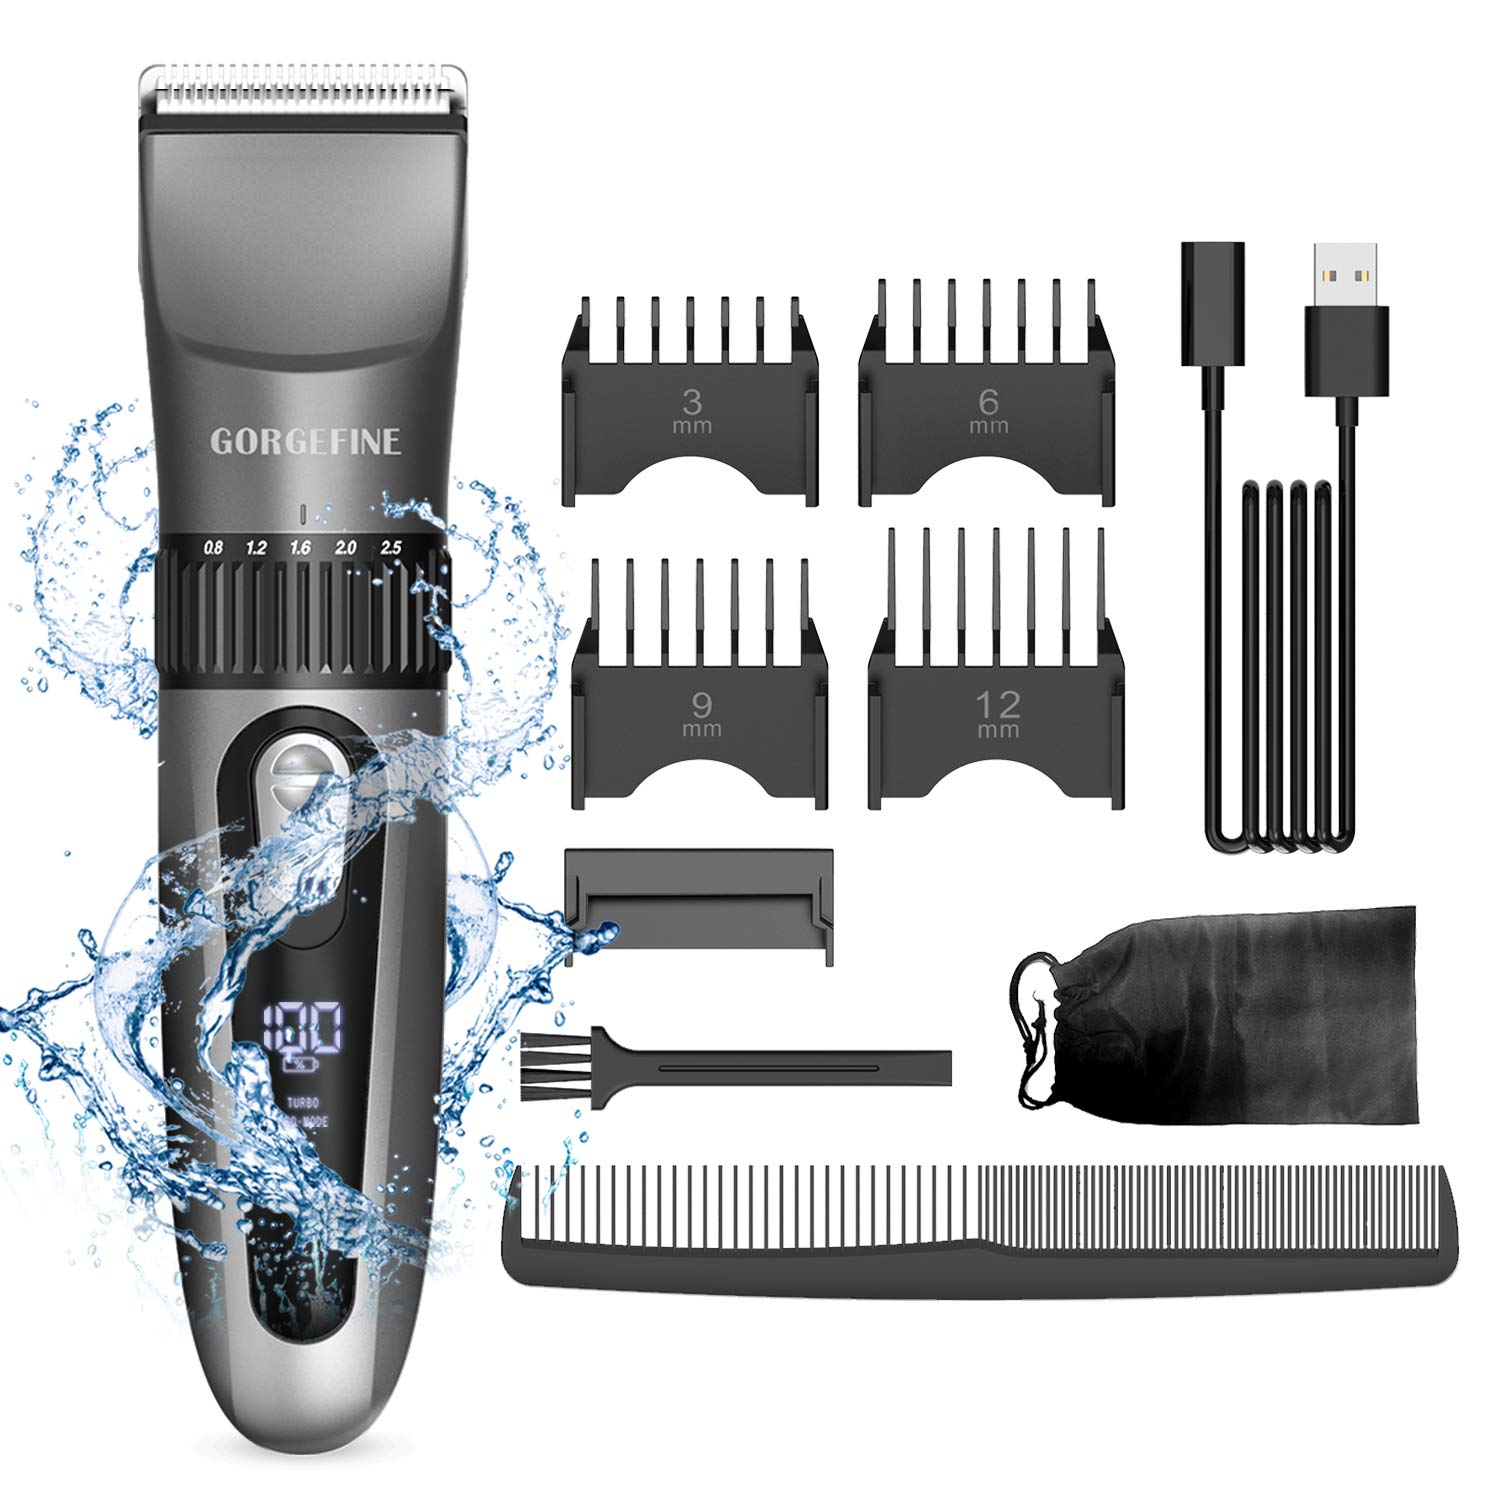 Gorgefine可充电理发器和修剪器，用于男士专业无绳理发和美容套件，带LED显示屏防水-涡轮增压模式和超静音模式